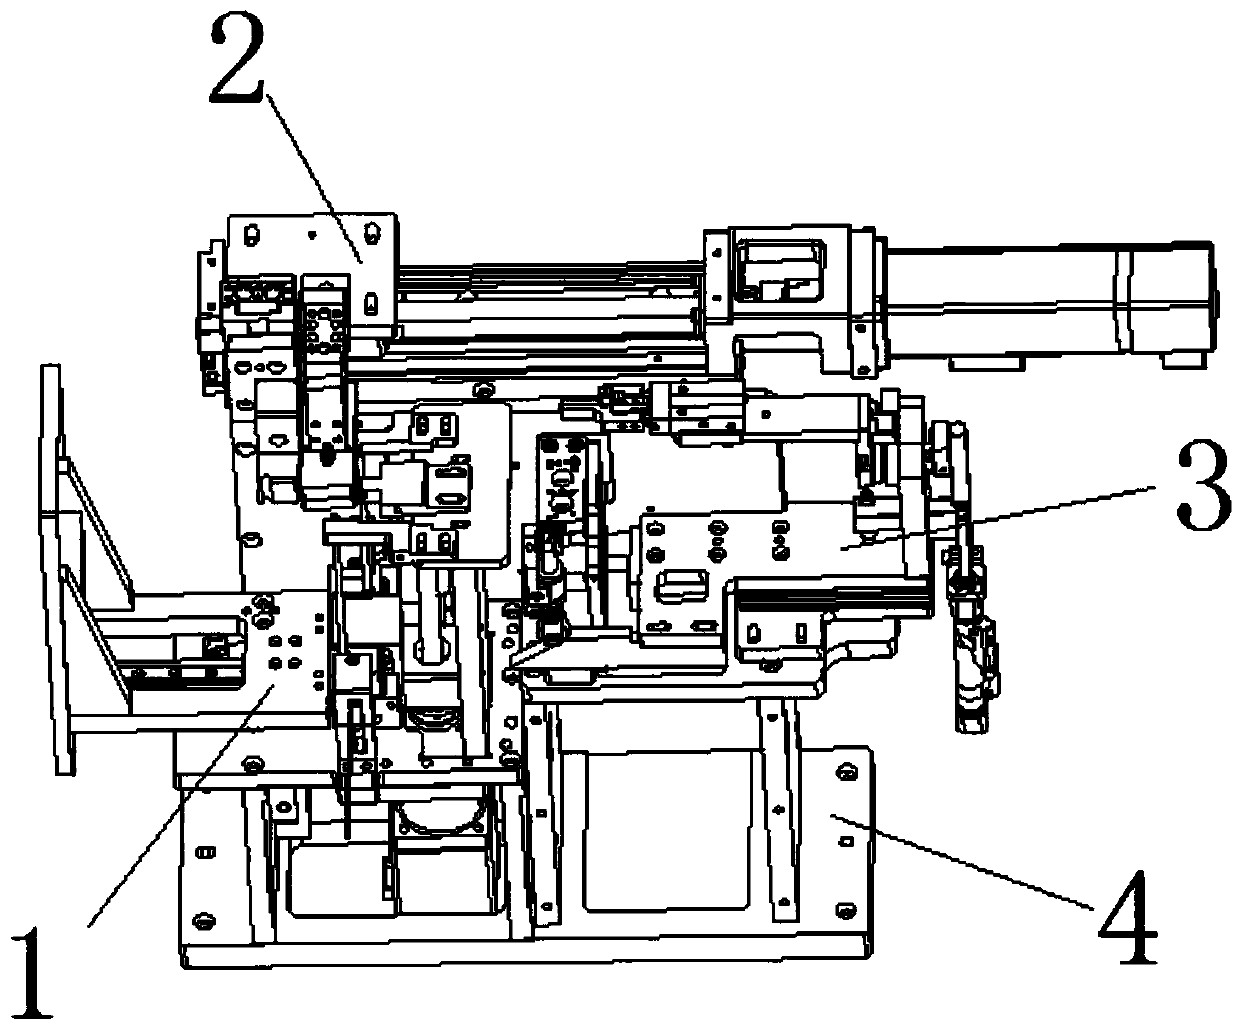 An automatic feeding film tearing mechanism